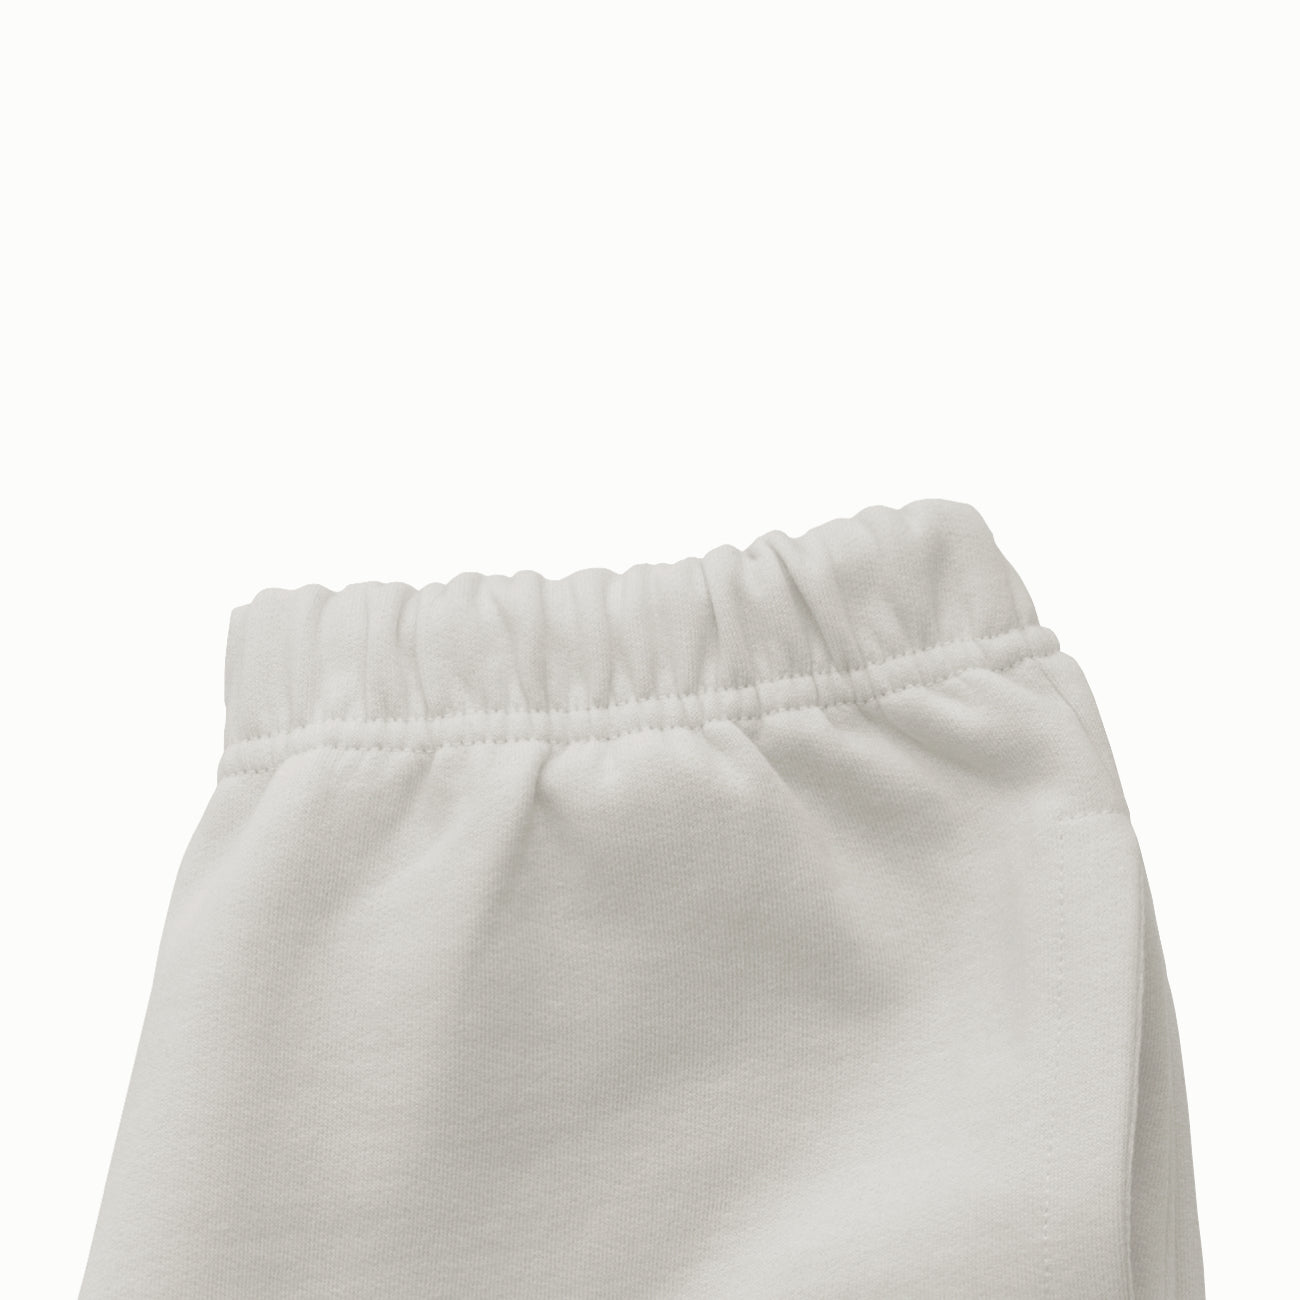 Folded Sweatpants 001 Mockup (Front)